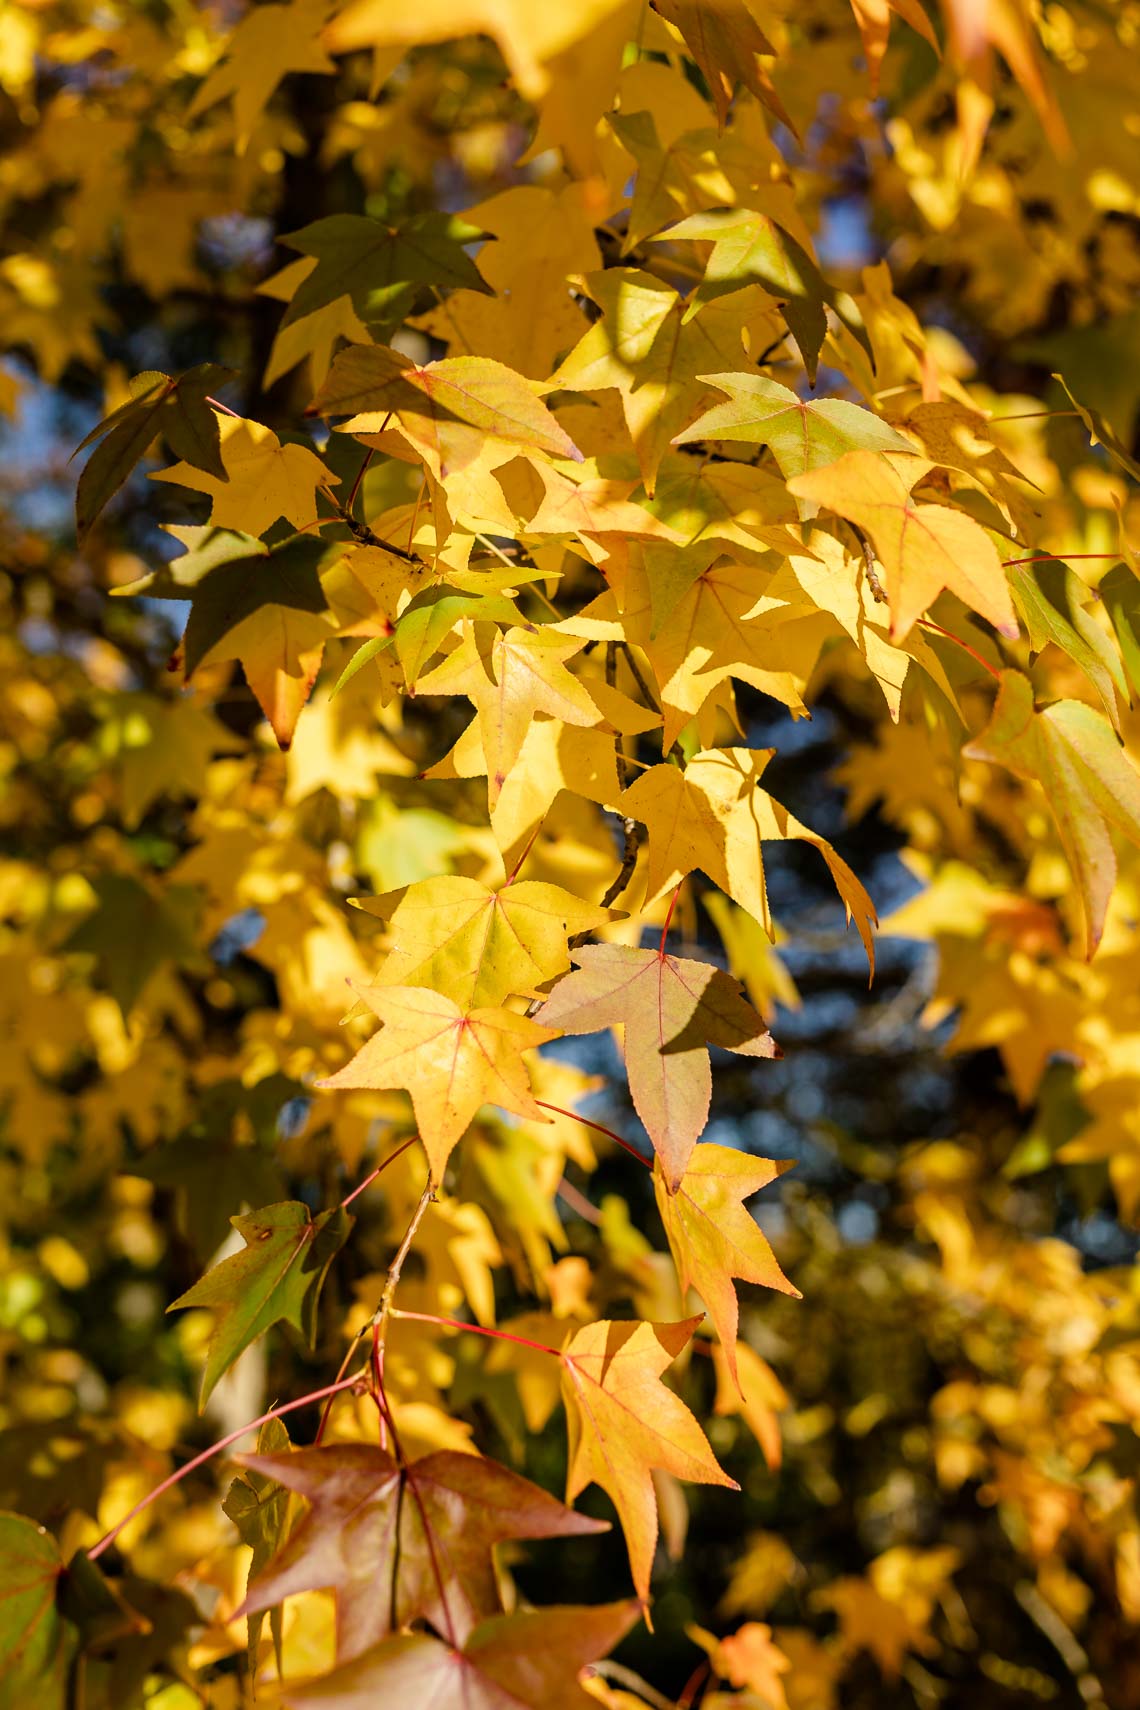 automne arboretum chatenay malabry